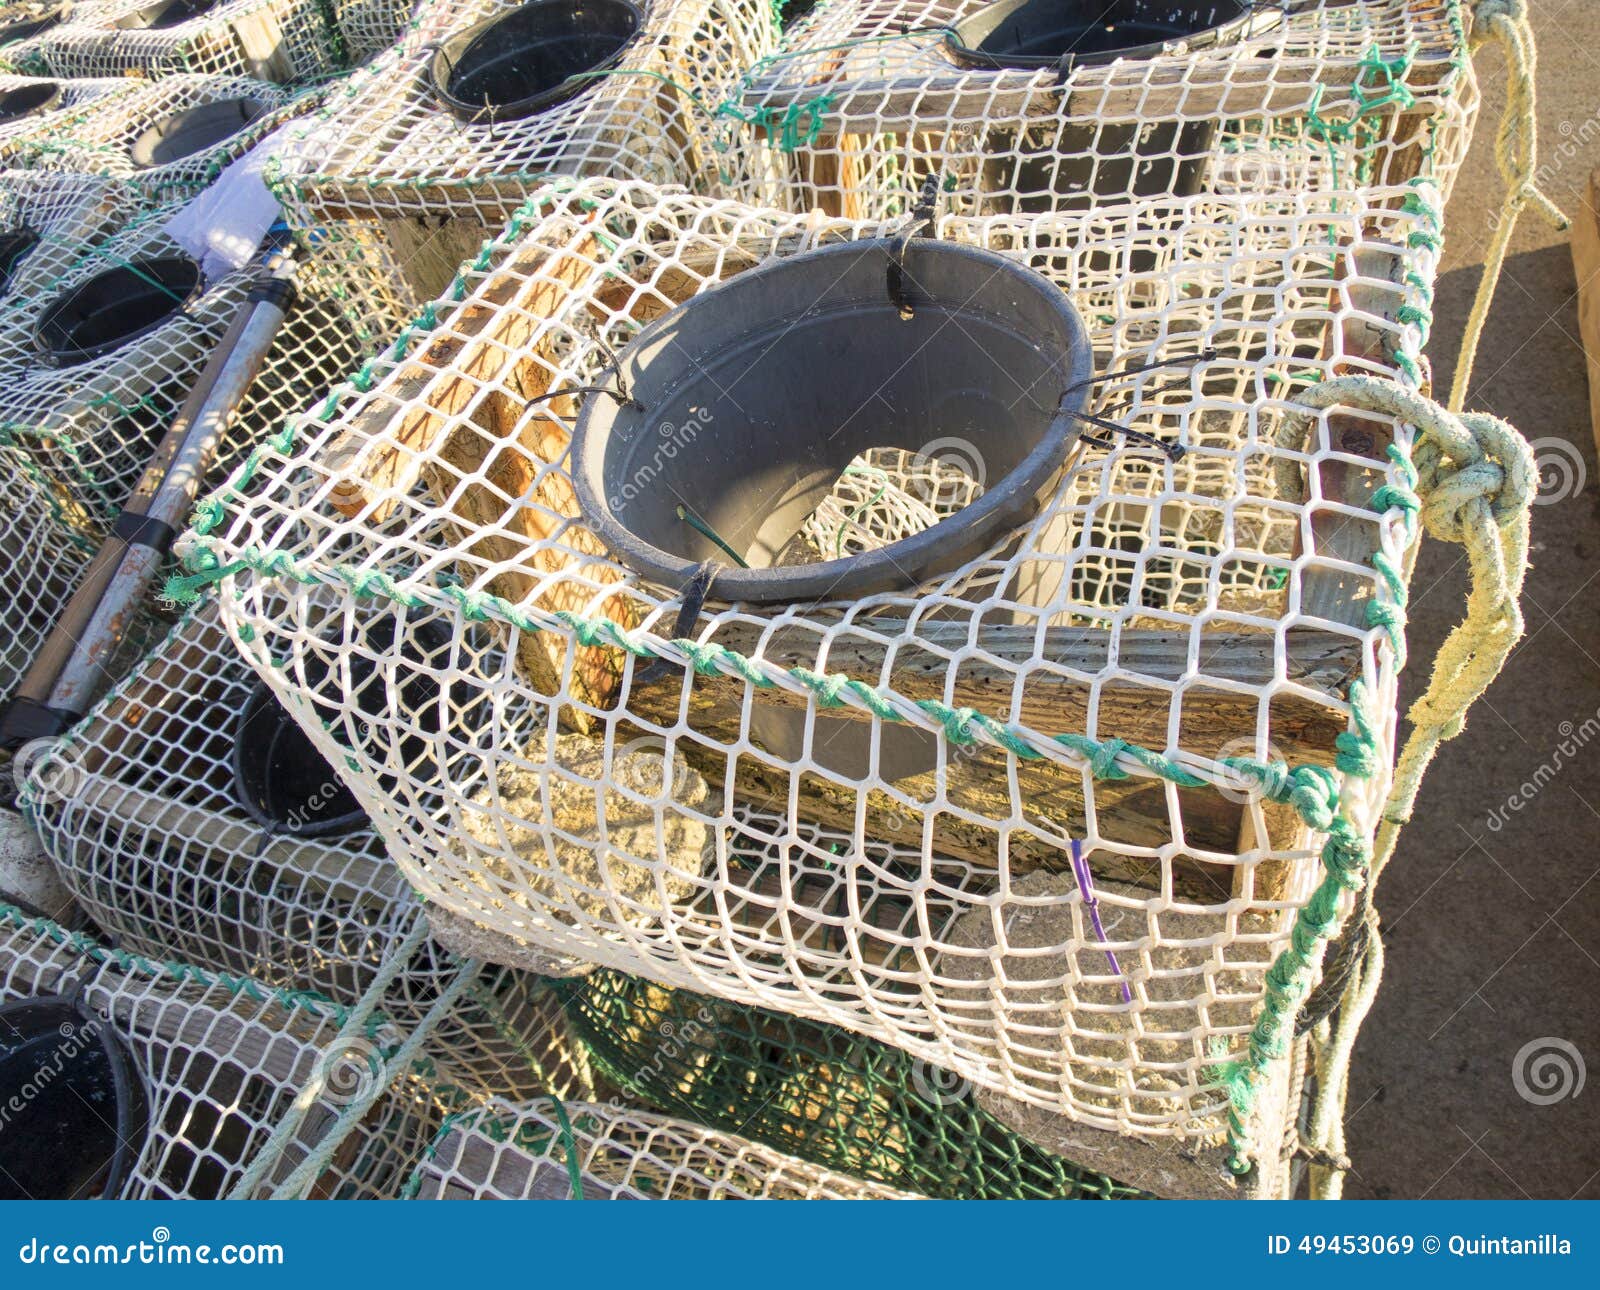 Fishing creels closeup stock image. Image of quayside - 49453069